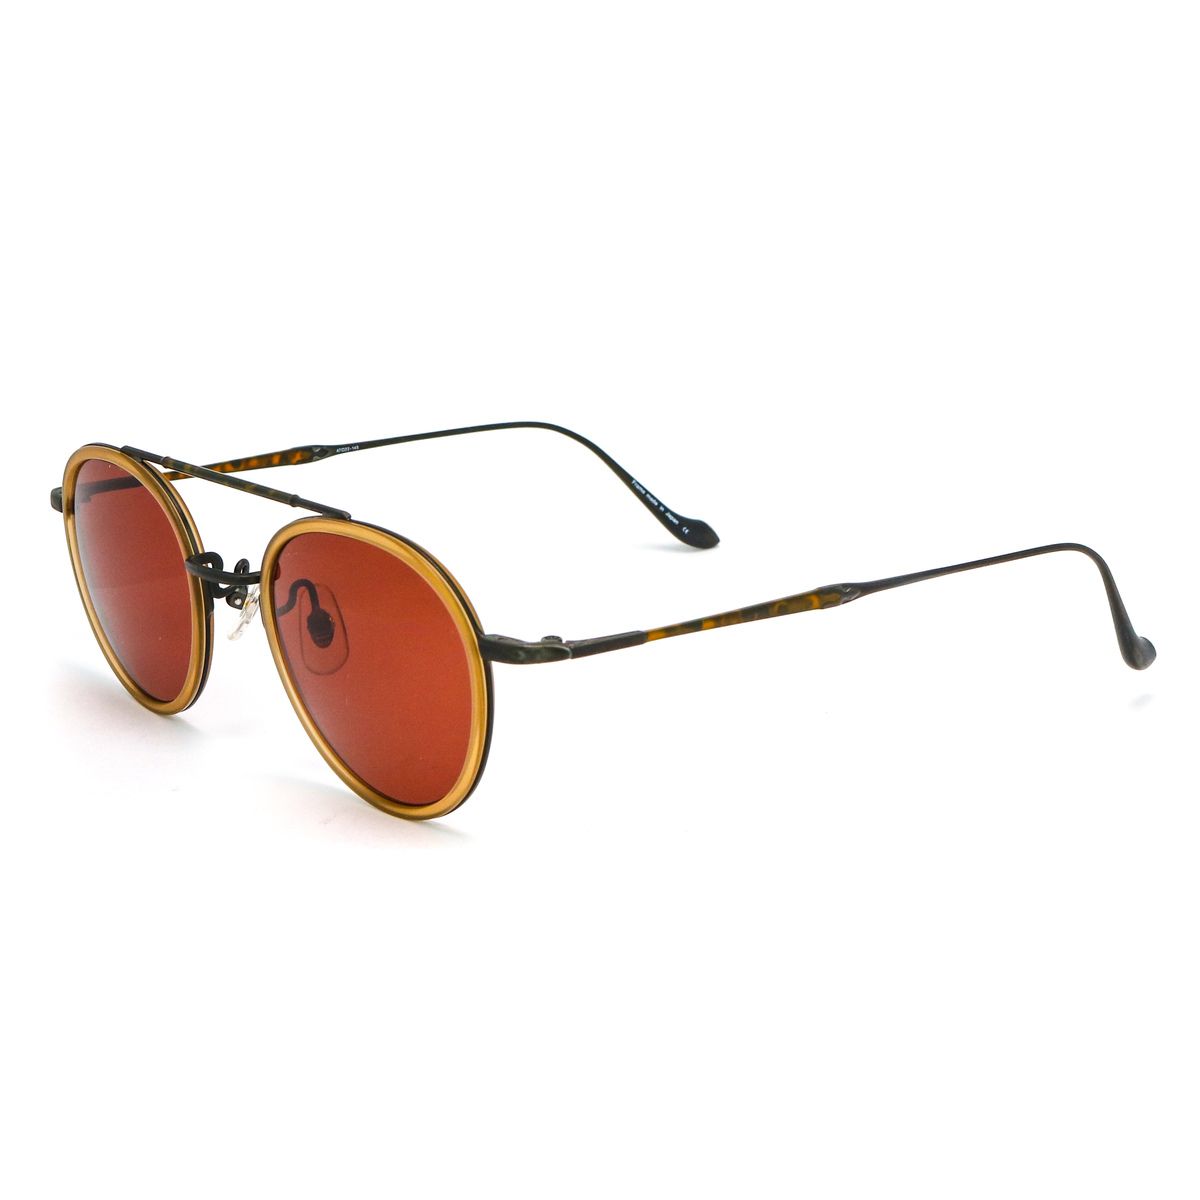 XTRA Square Sunglasses KH2 - size 55